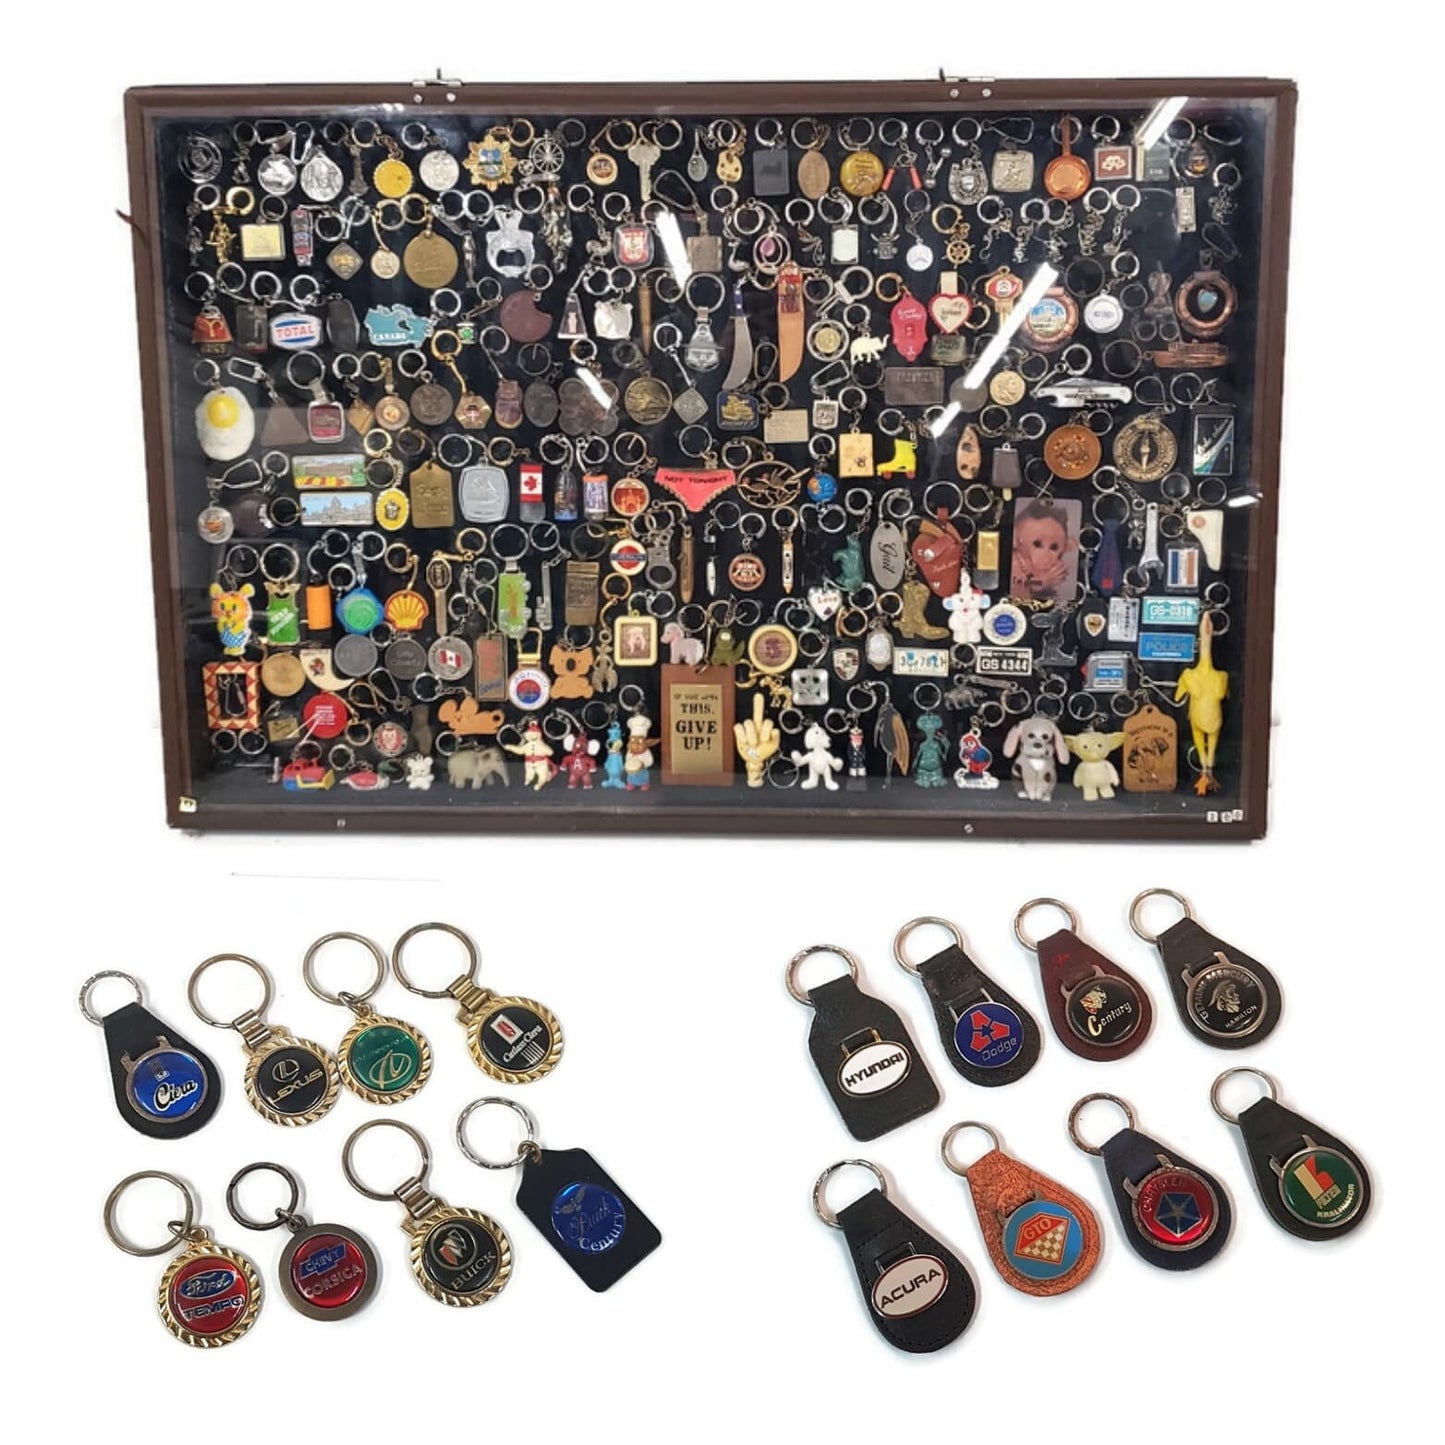 BUICK skyhawk Key Chain Keychain Key Fob Keytag Vintage Automotove Keychain Gift Collectible